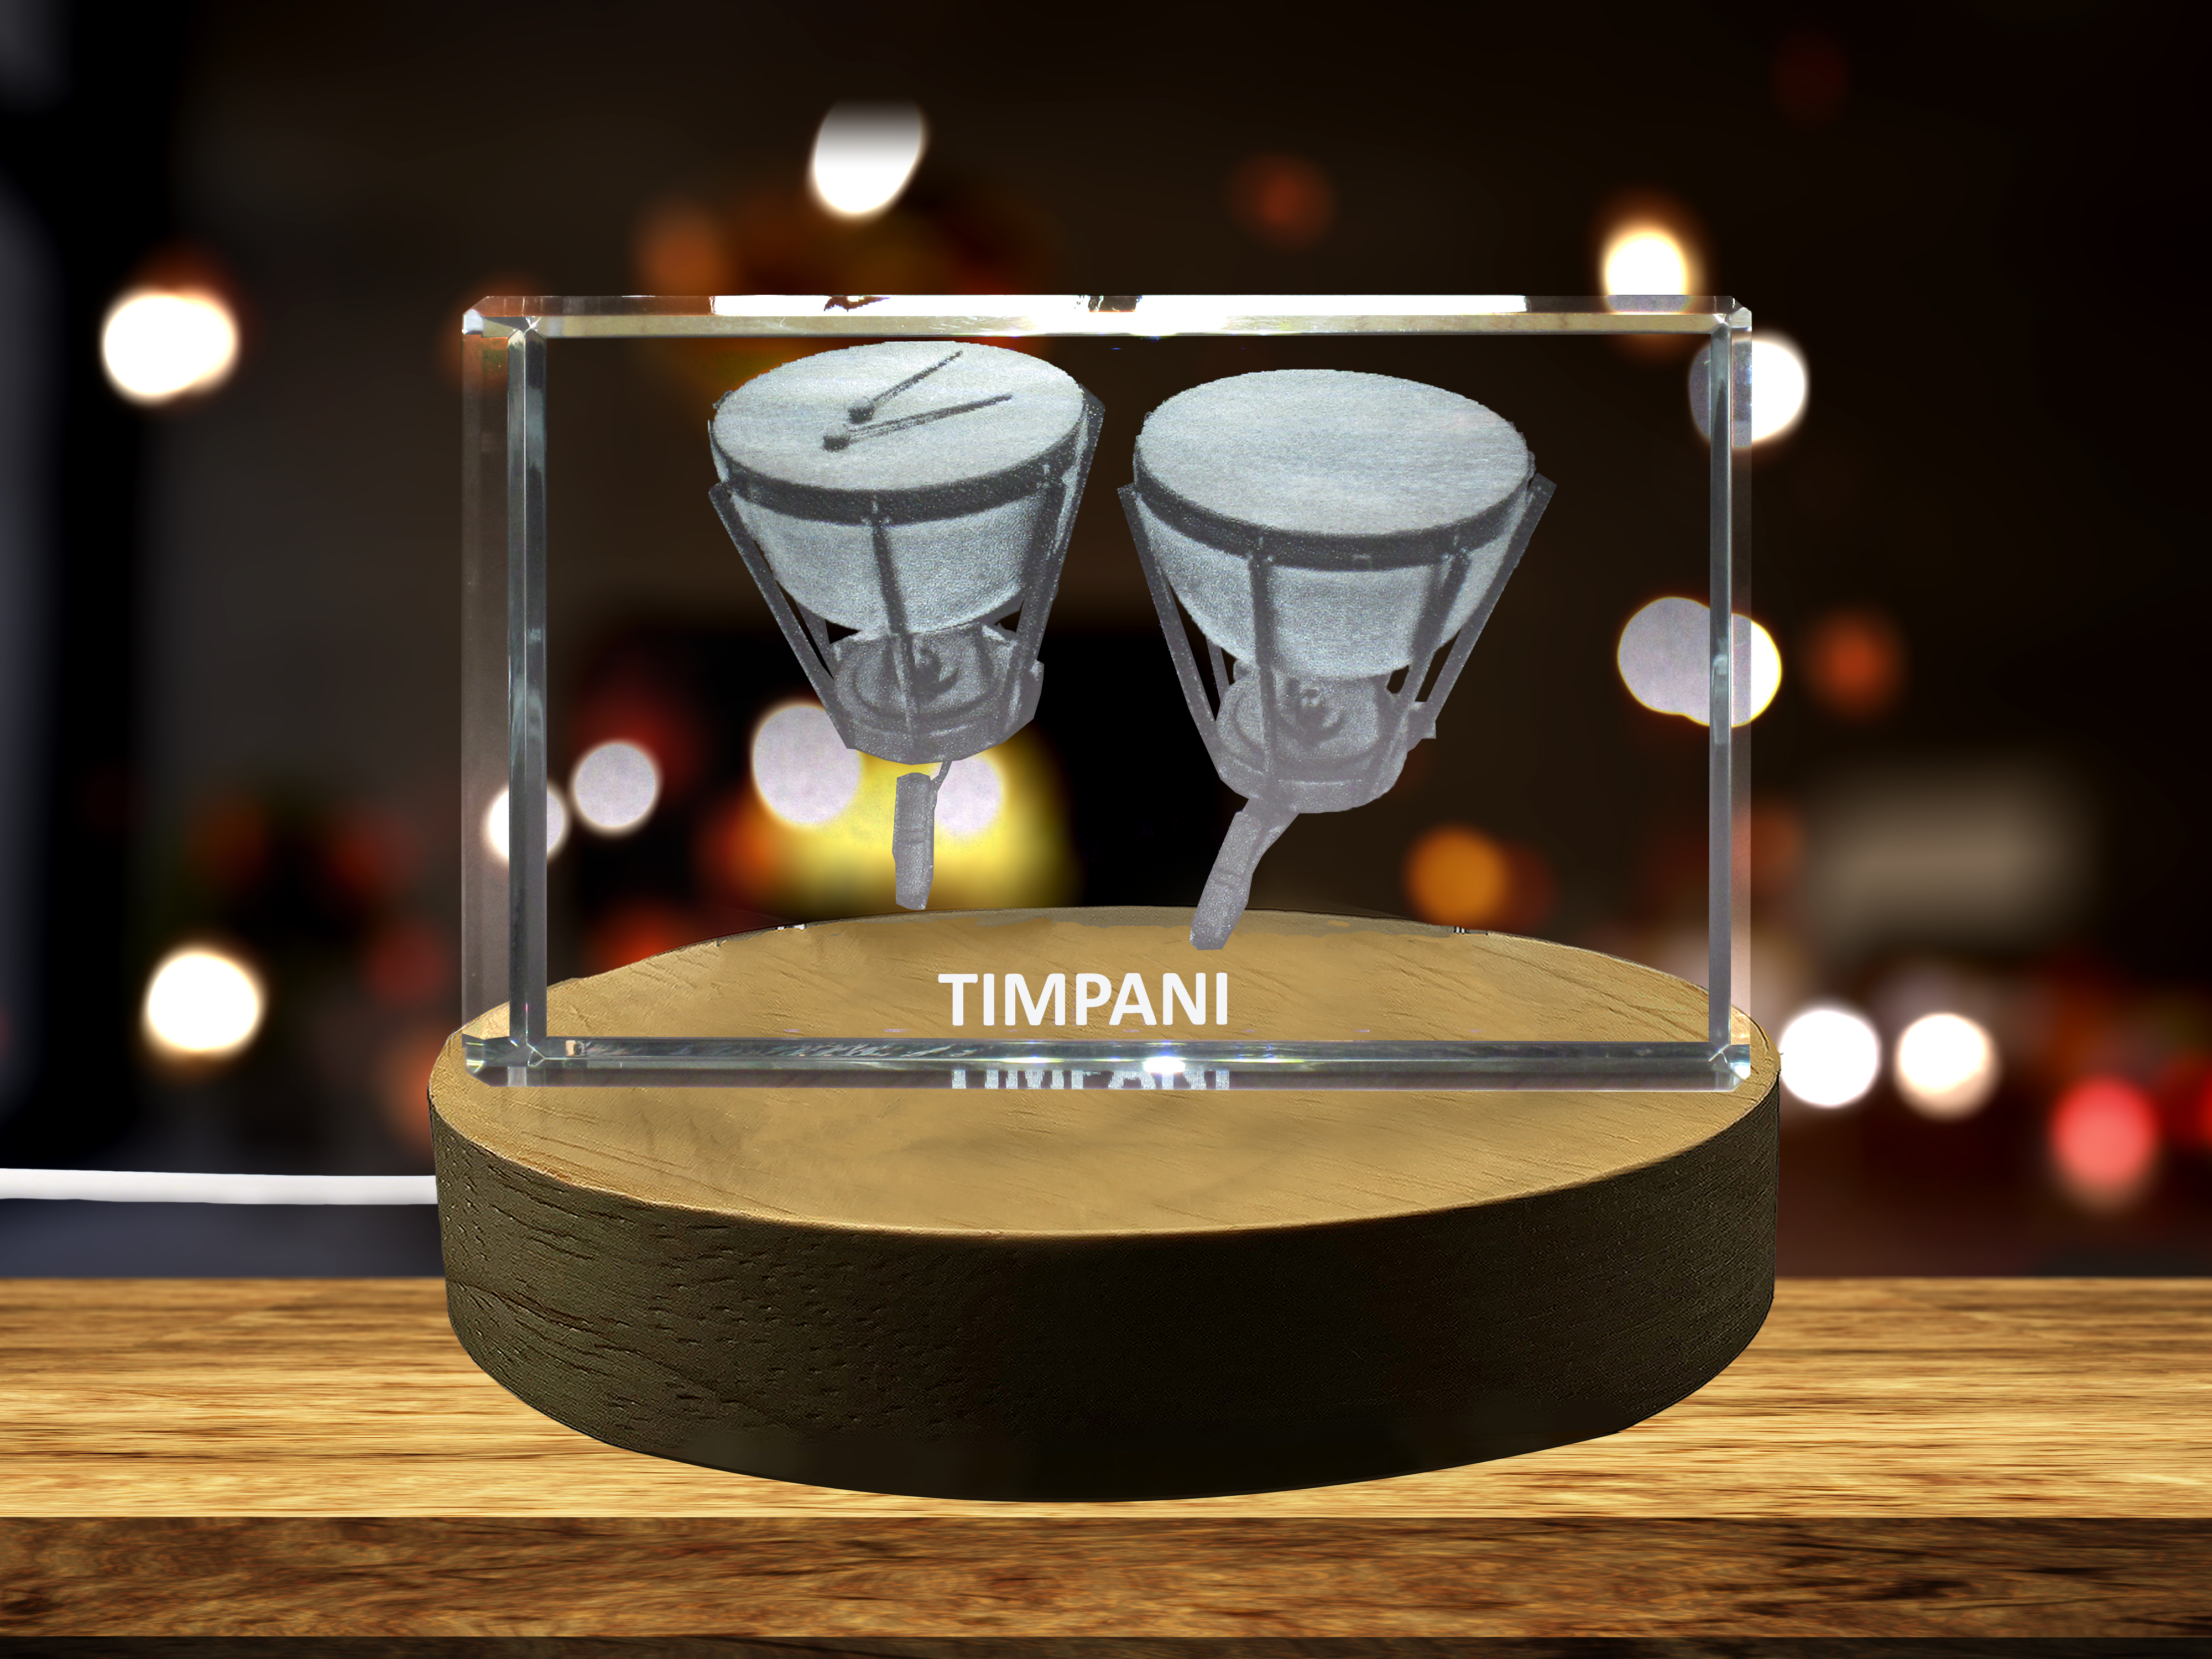 Timpani 3D Engraved Crystal 3D Engraved Crystal Keepsake/Gift/Decor/Collectible/Souvenir A&B Crystal Collection